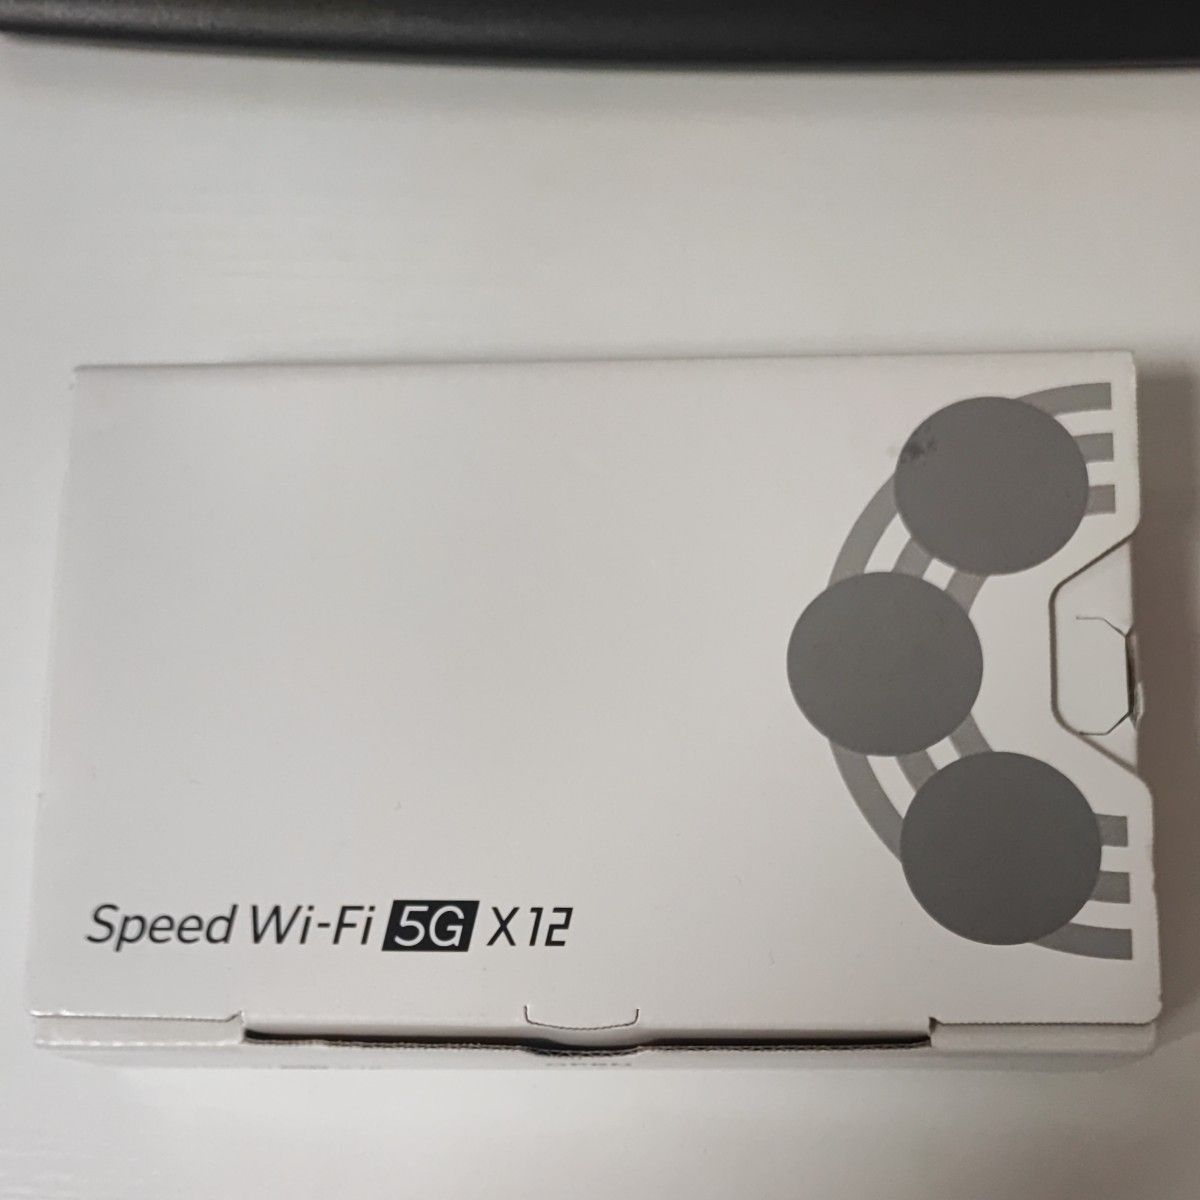 Speed Wi-Fi 5G X12 NAR03 アイスホワイト 未使用品